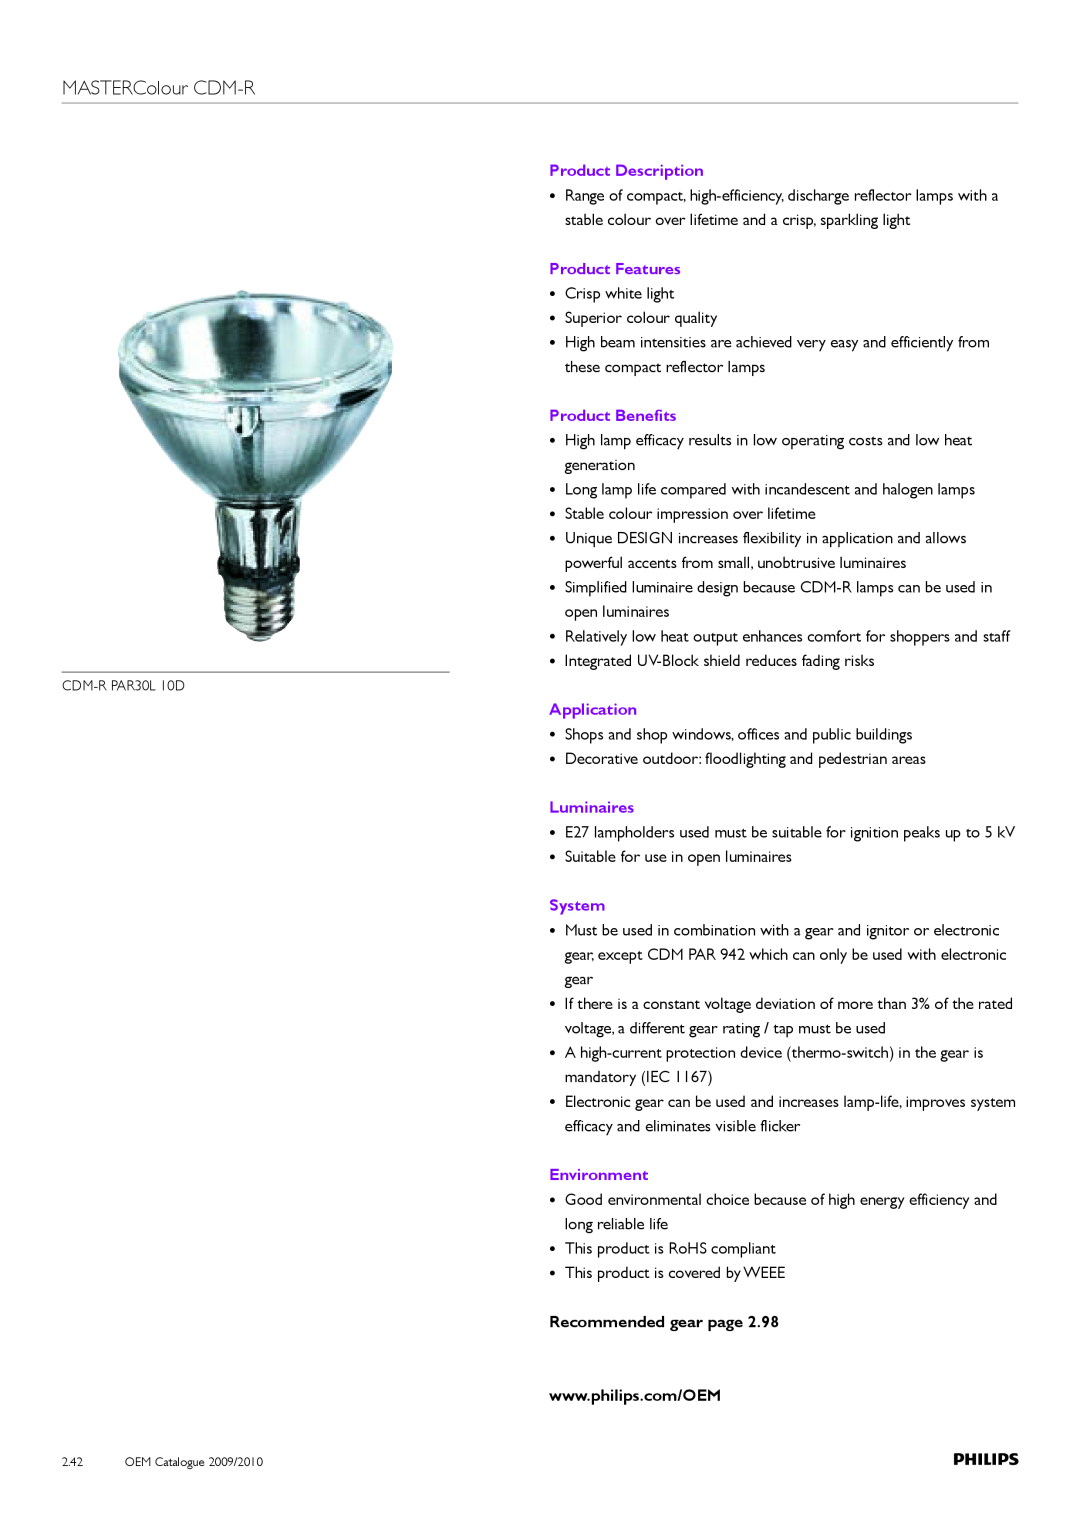 Philips Compact HID Lamp and Gear MASTERColour CDM-R, Product Description, Product Features Crisp white light, Application 